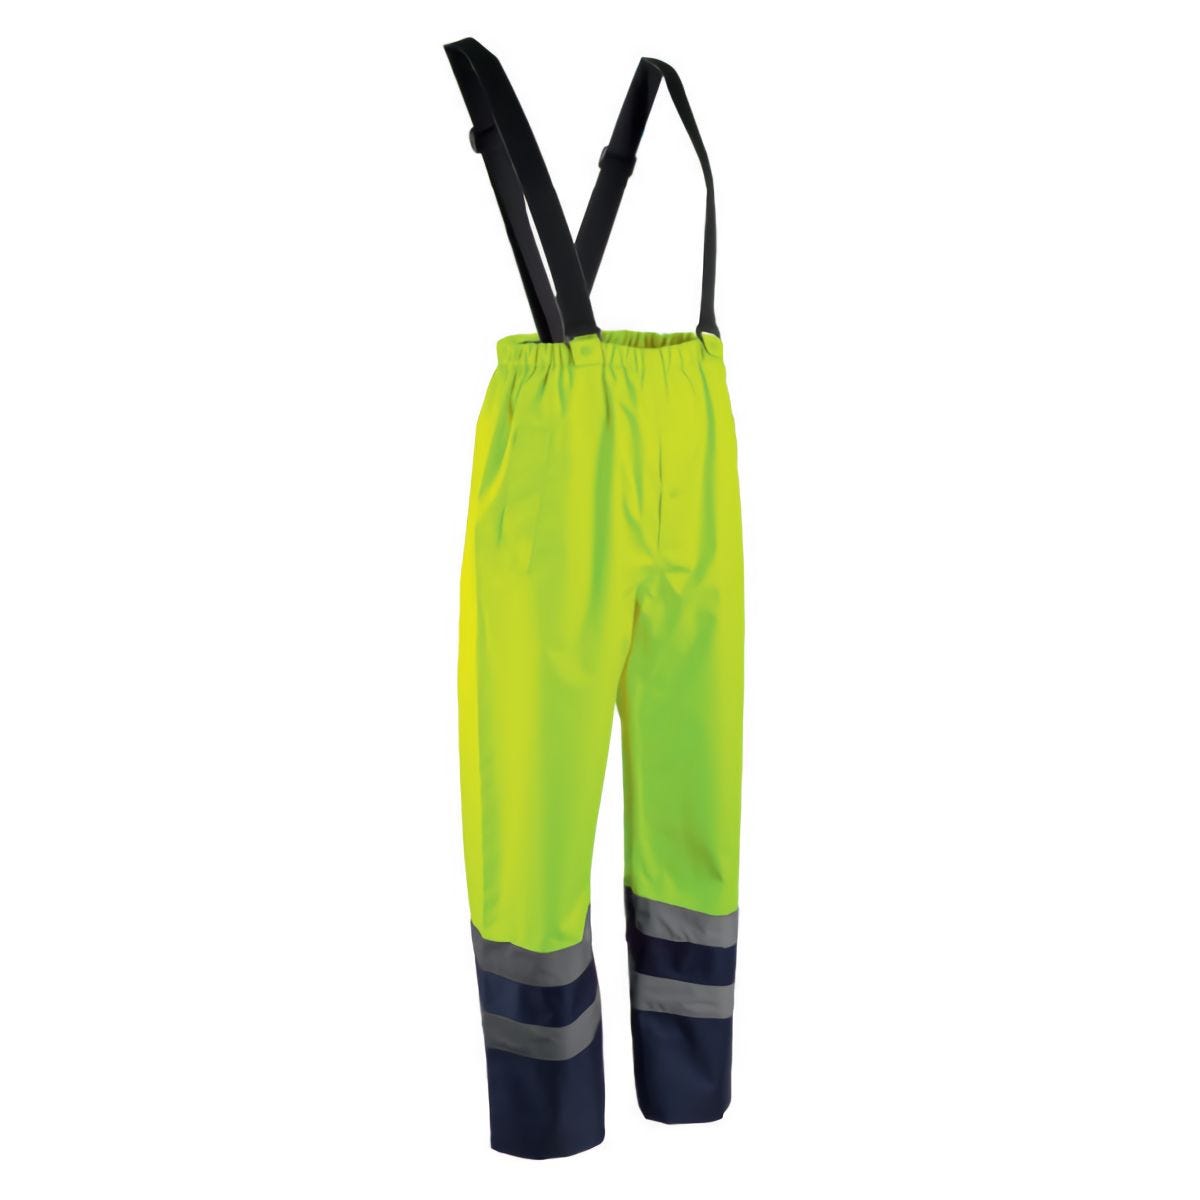 Pantalon Hydra jaune et marine - Coverguard - Taille L 0